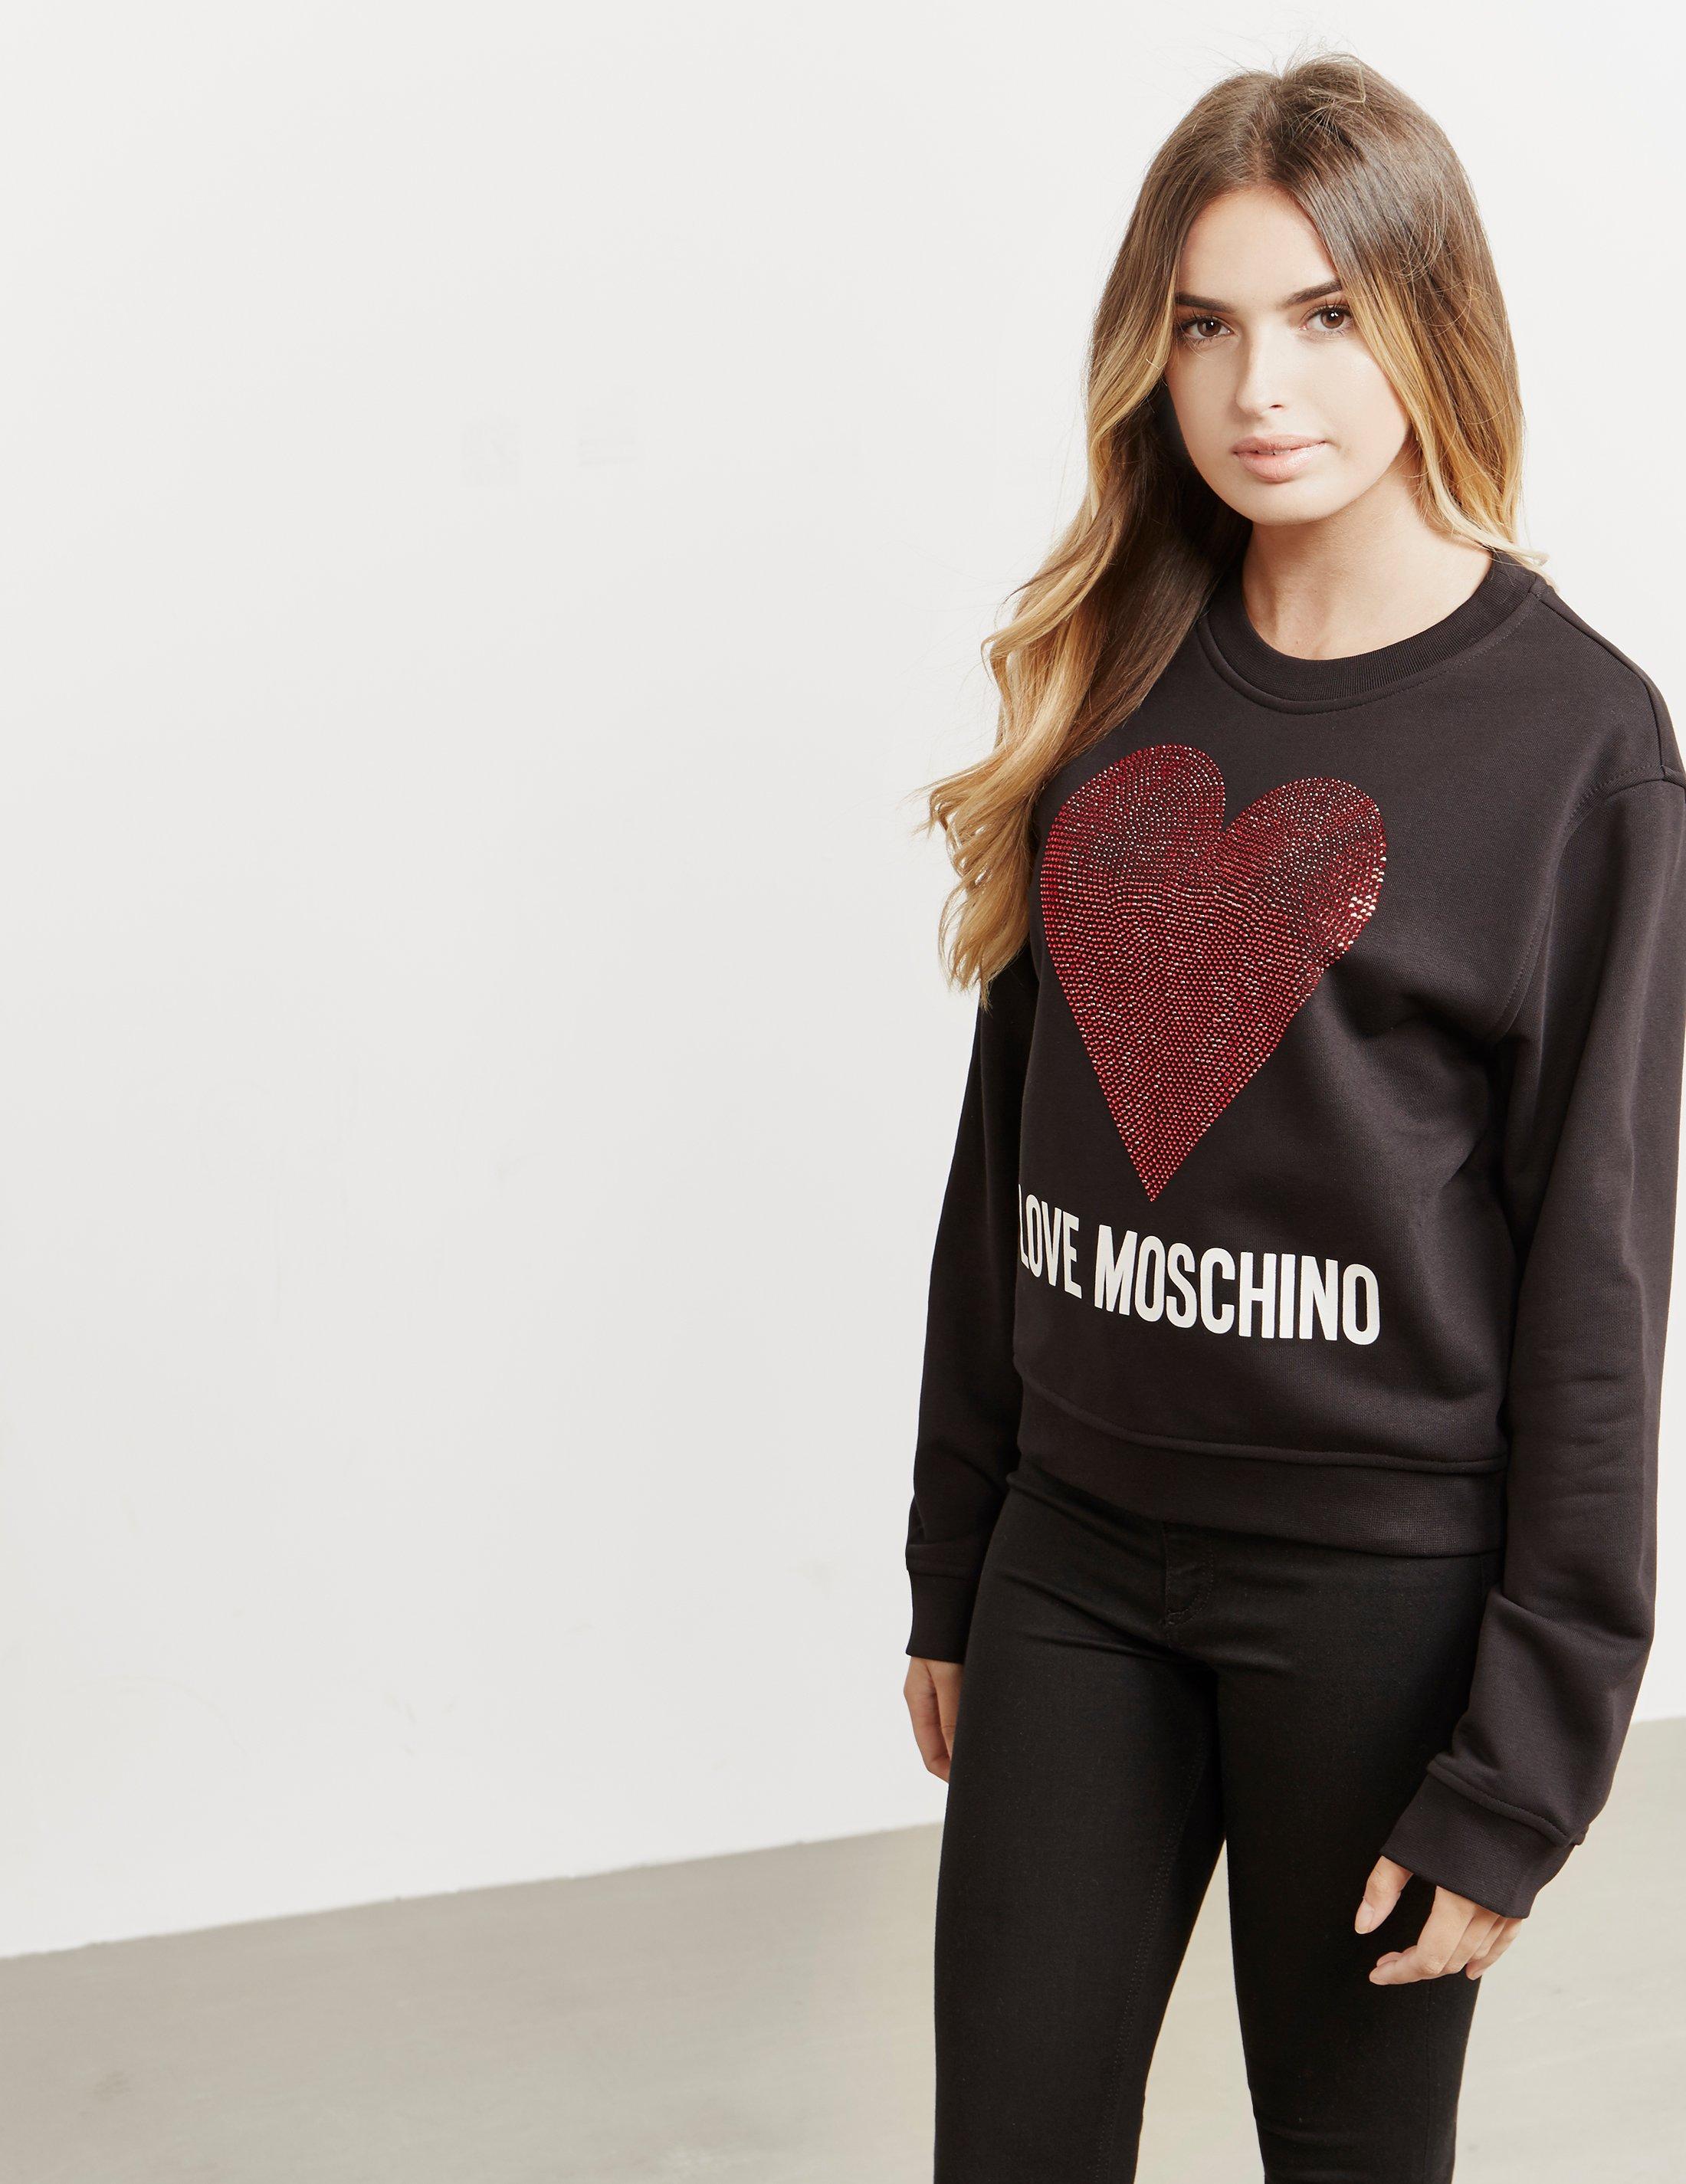 Love Moschino Hoodie Women's Discount, 54% OFF | empow-her.com